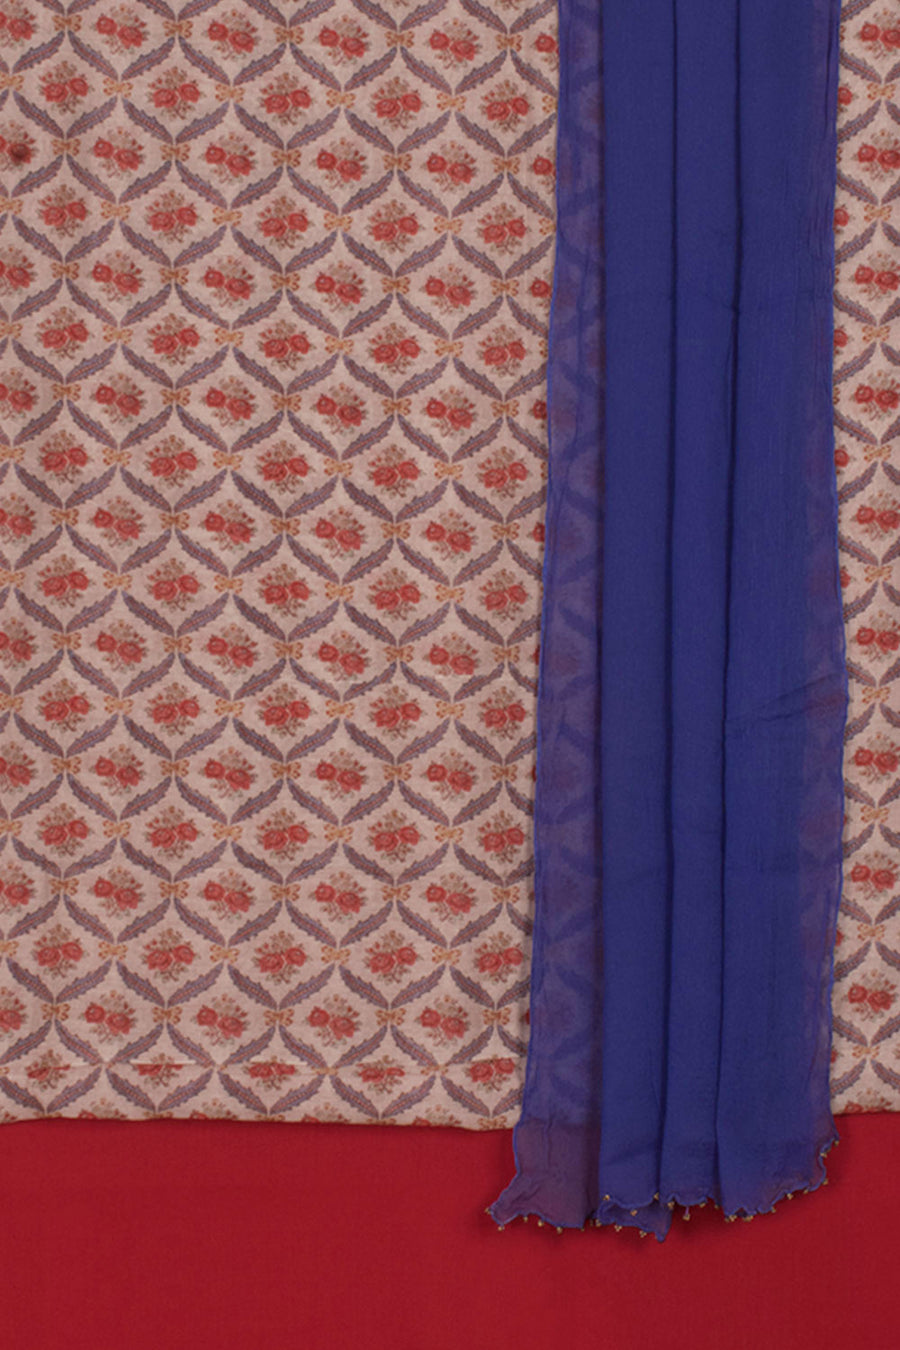 Digital Printed Chanderi Silk Cotton 3-Piece Salwar Suit Material with Mulmul Bottom and Chiffon Dupatta